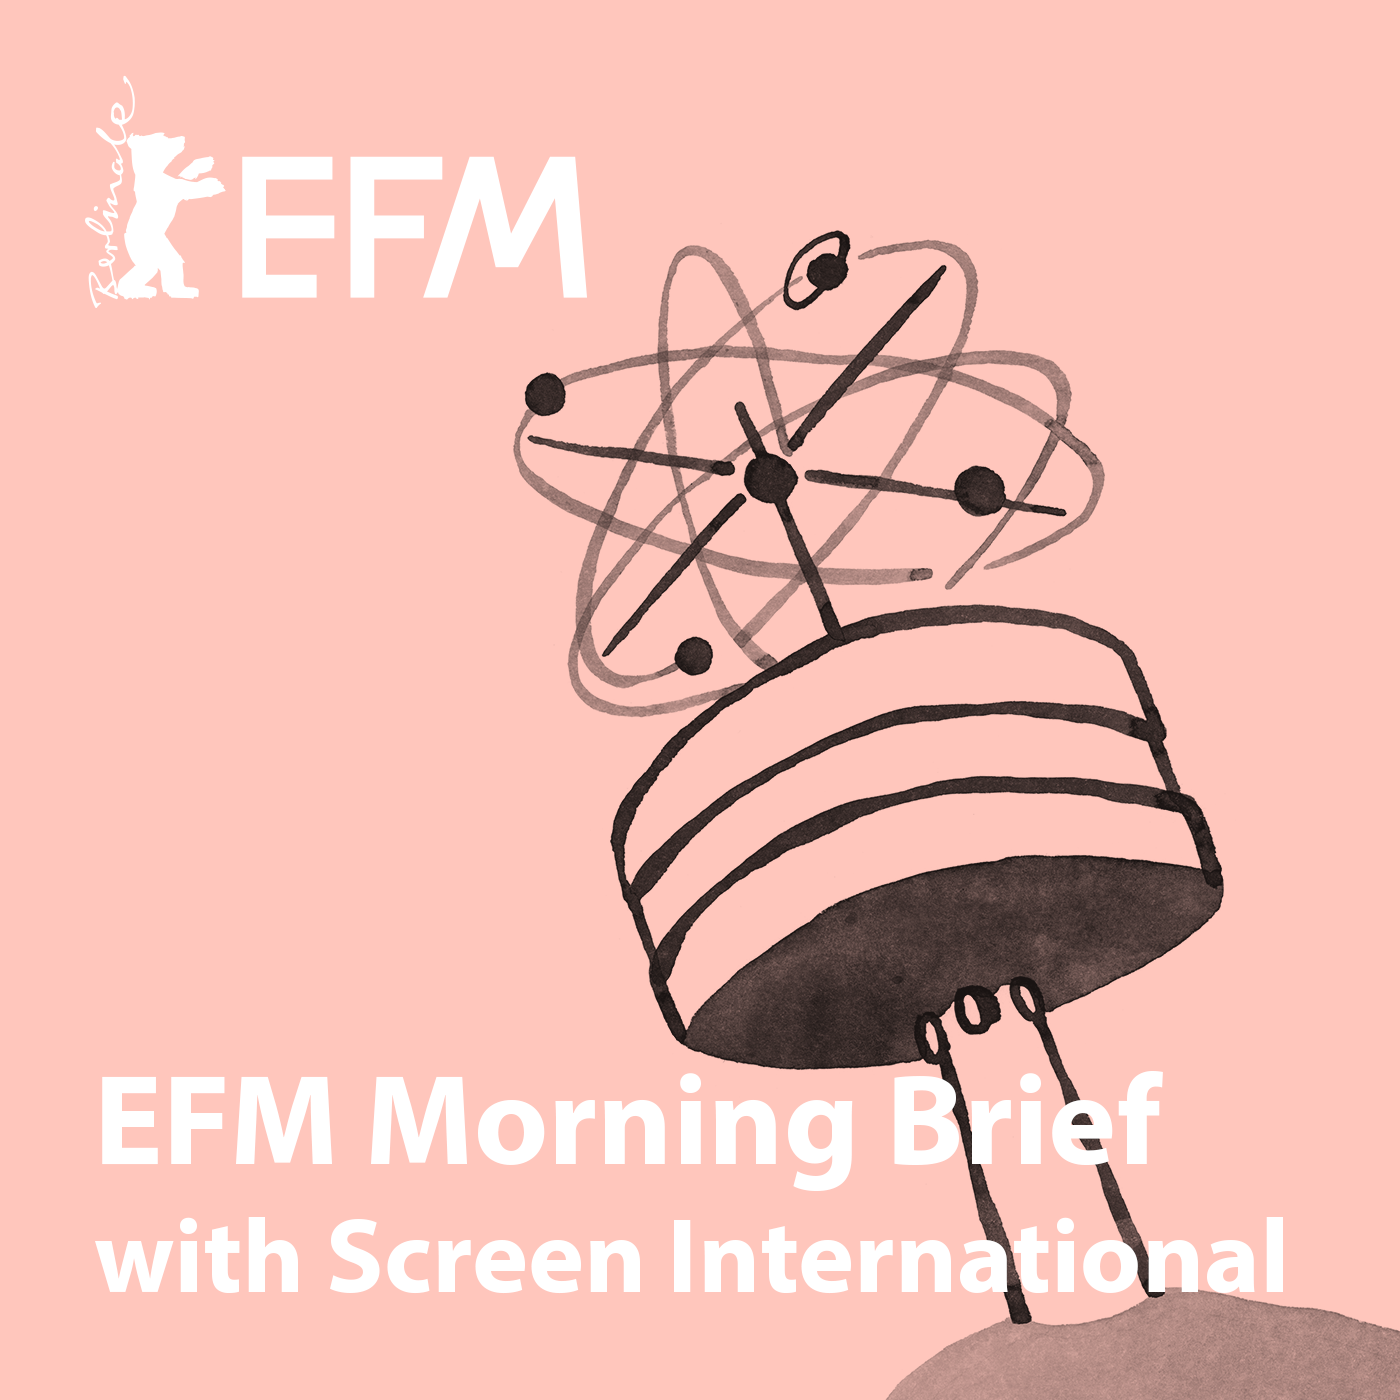 EFM Morning Brief with Screen International